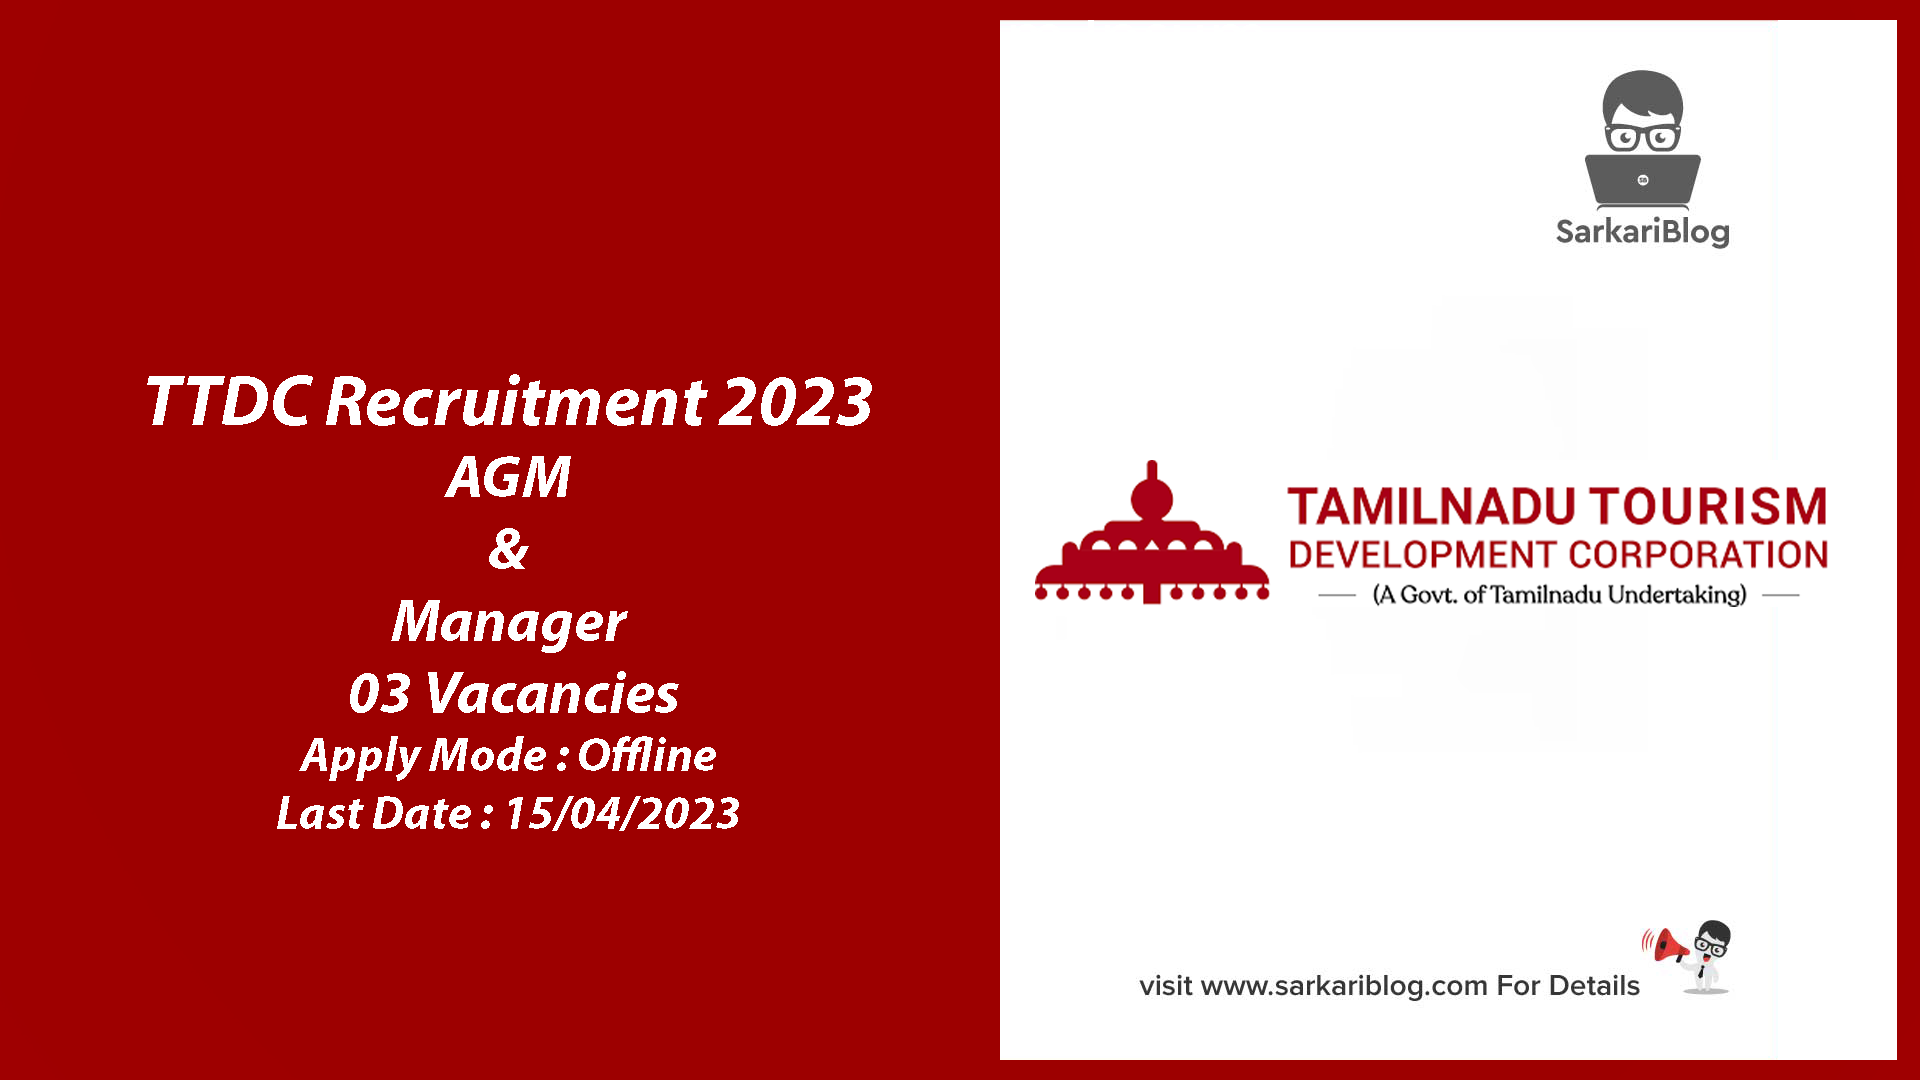 TTDC Recruitment 2023